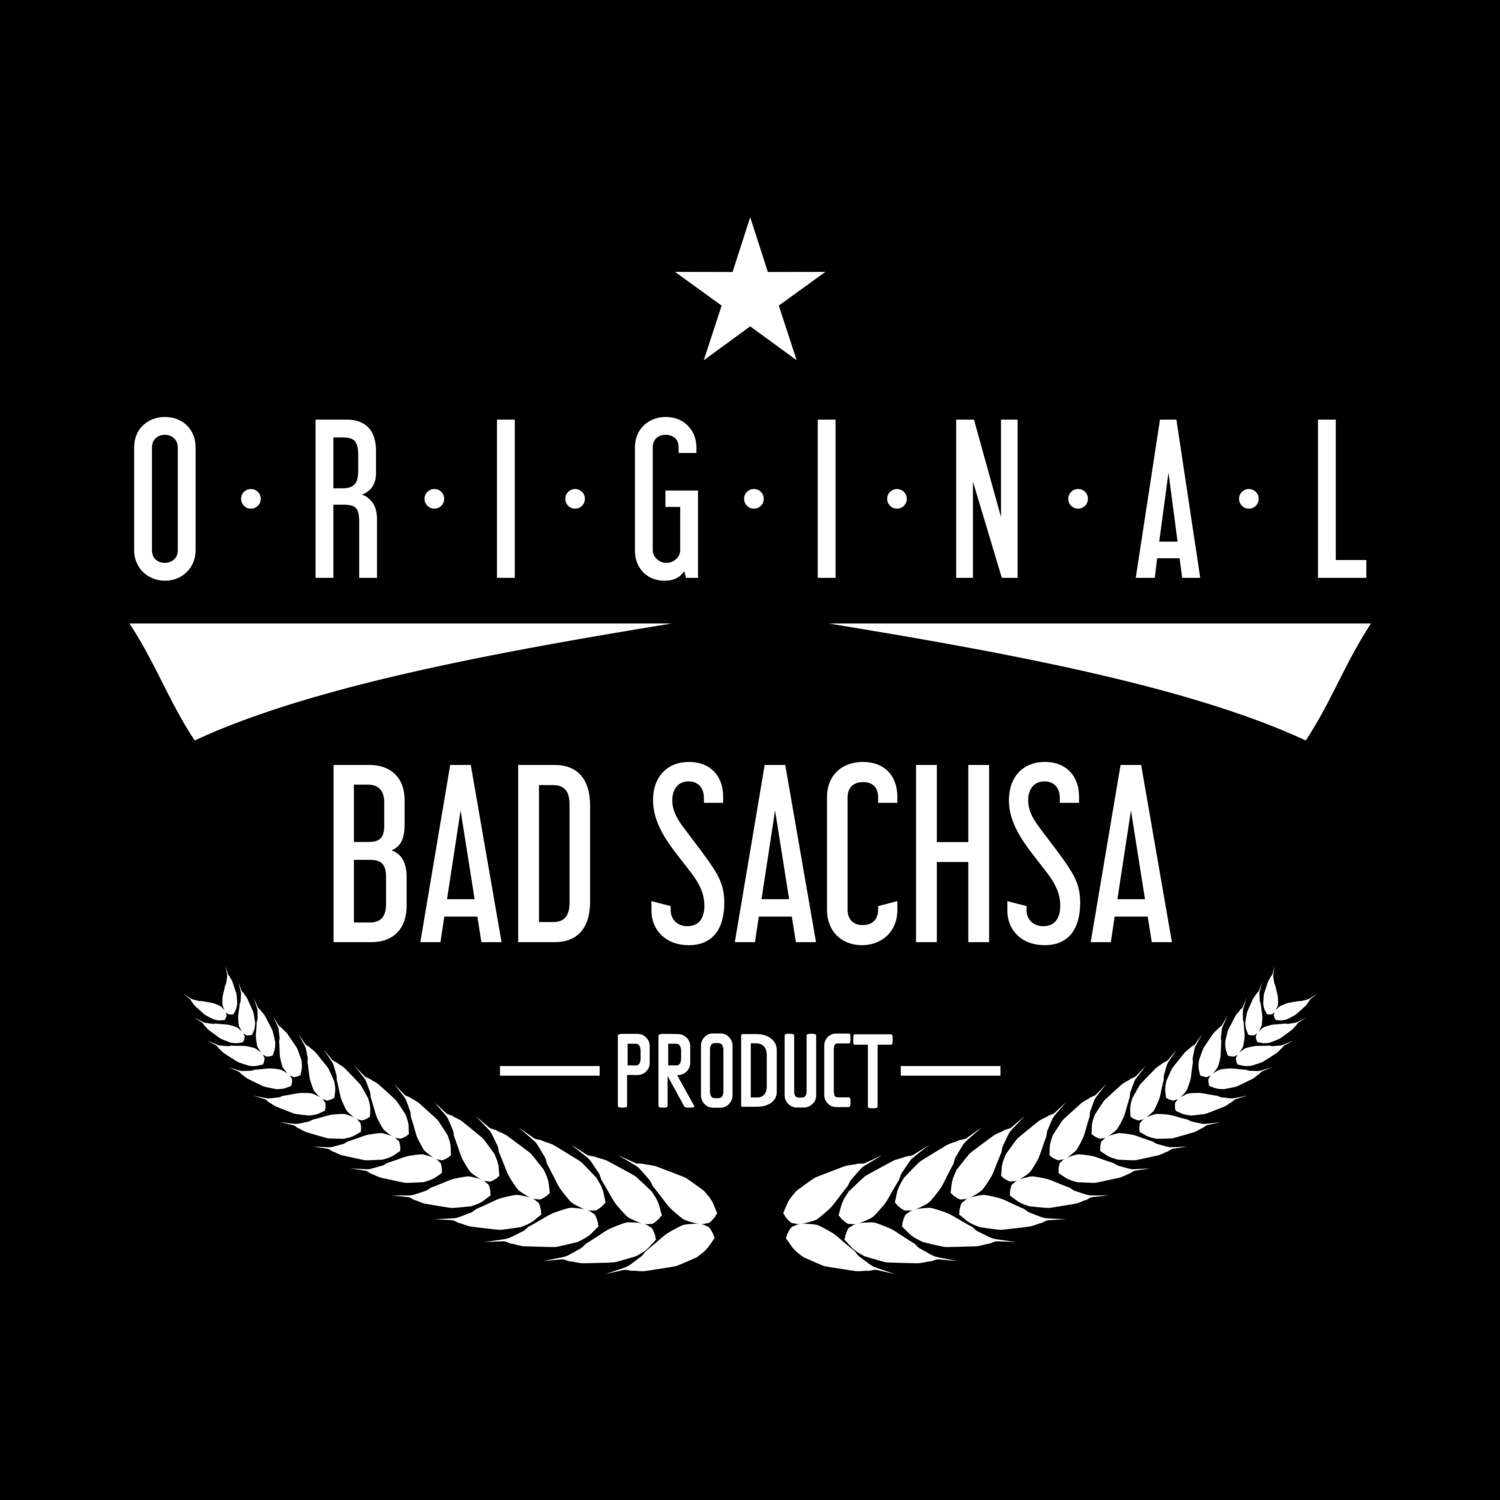 Bad Sachsa T-Shirt »Original Product«